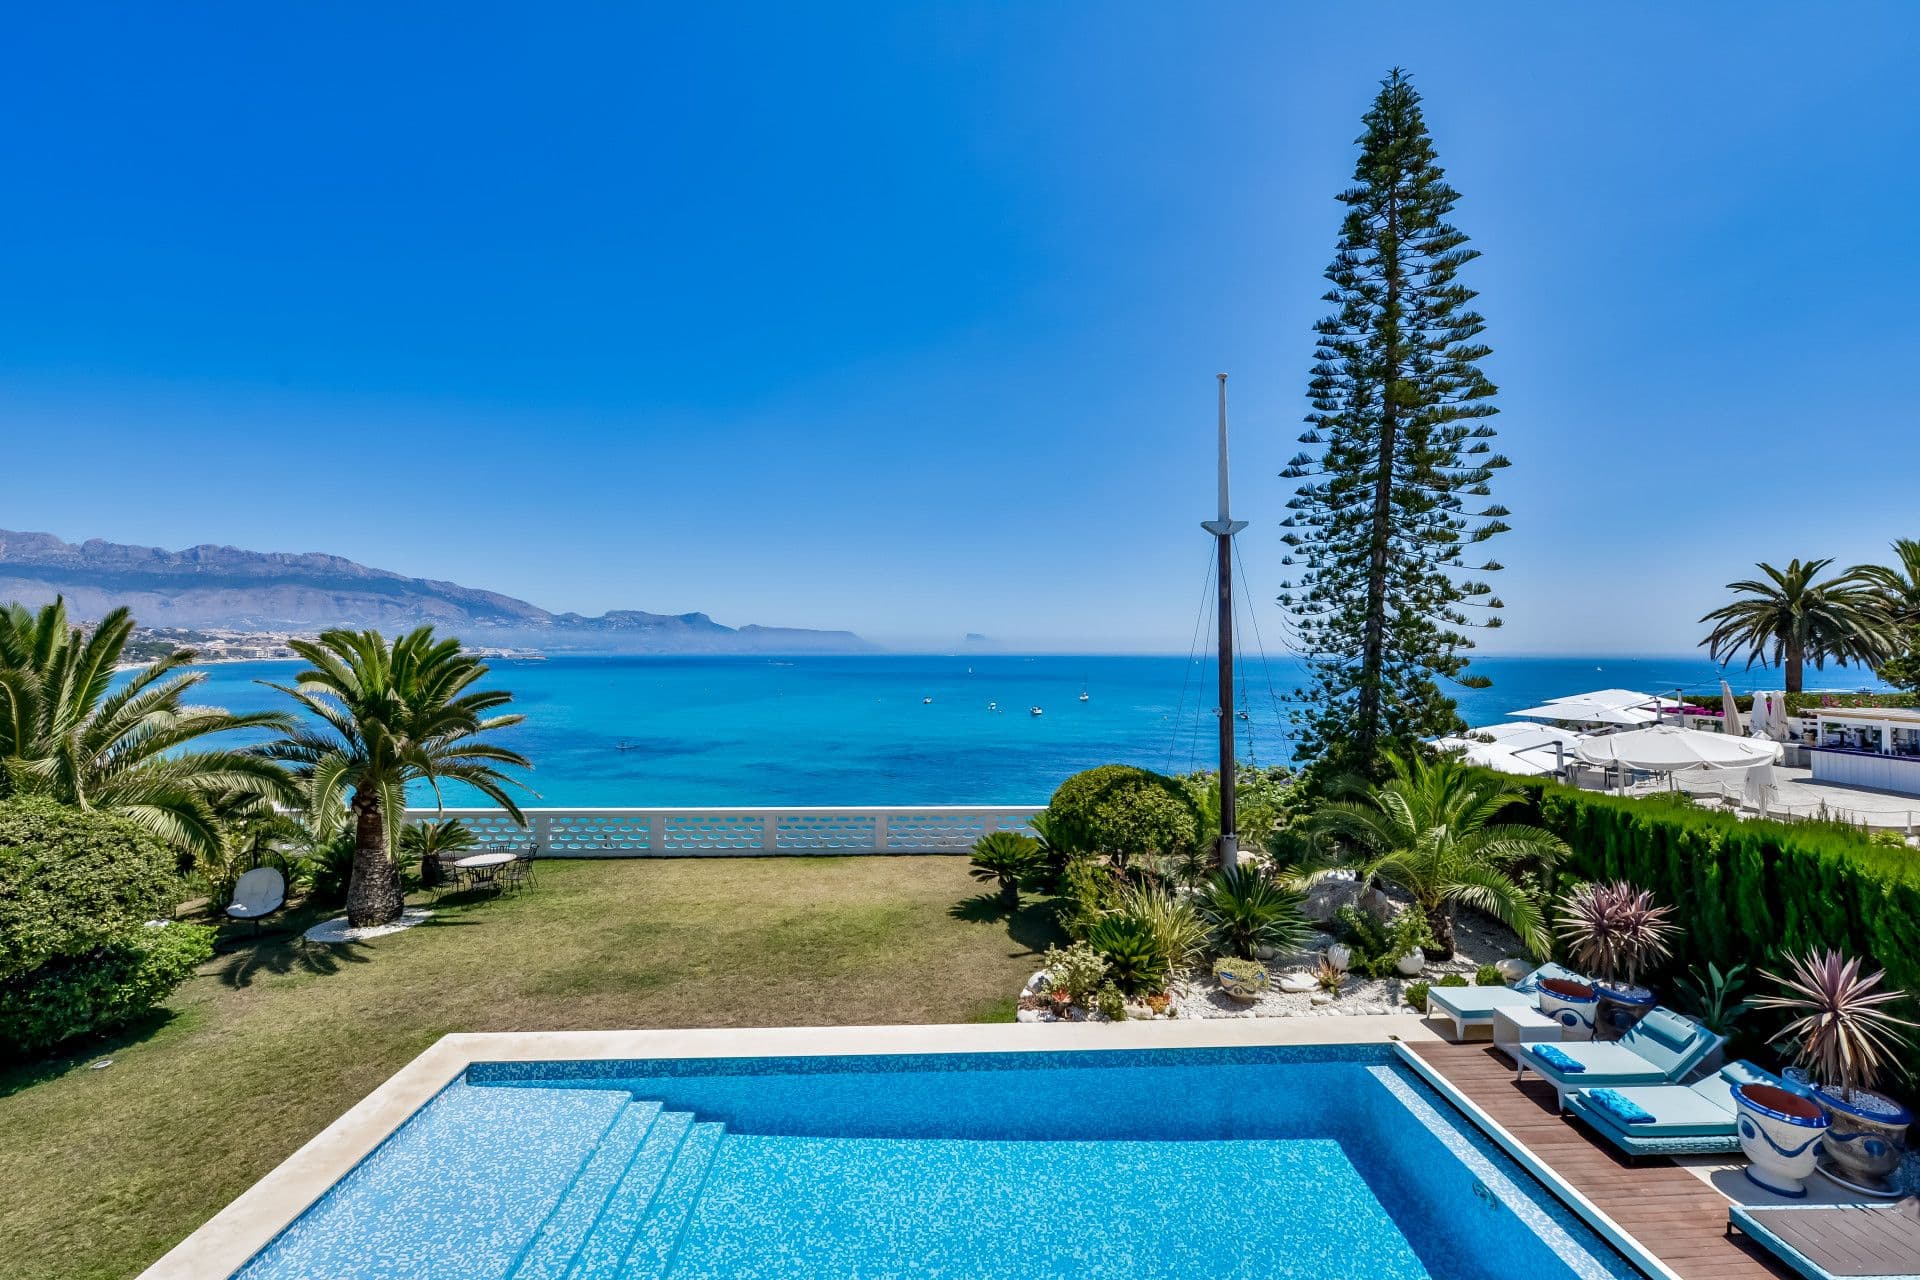 Villa for sale in front of the sea, located in the Playa del Albir.